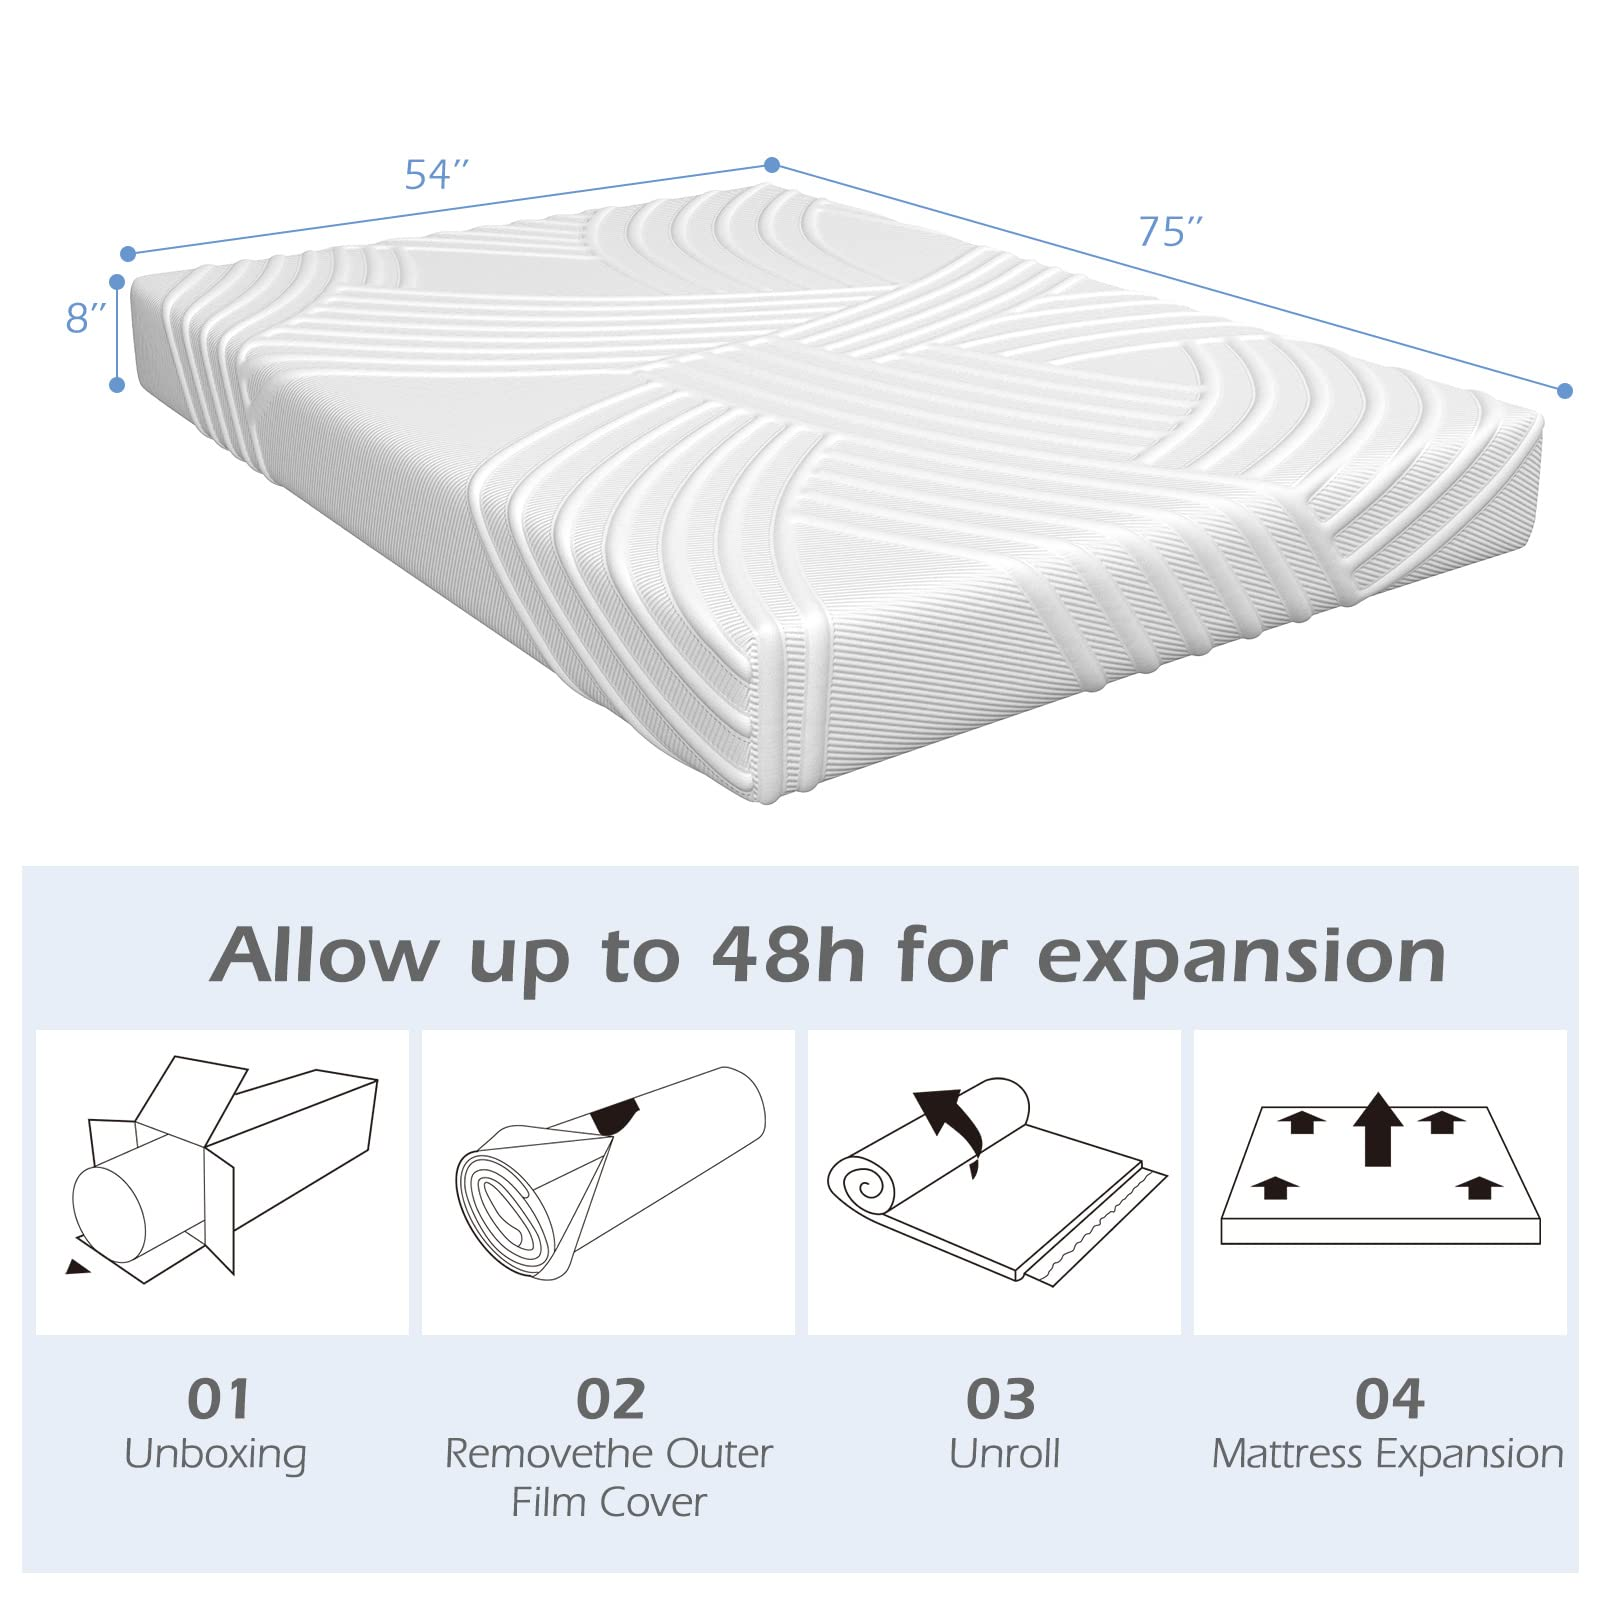 Giantex Memory Foam Mattress, 8 inch Mattress Full with Gel Infused Memory Foam for Cool Sleep & Pressure Relief